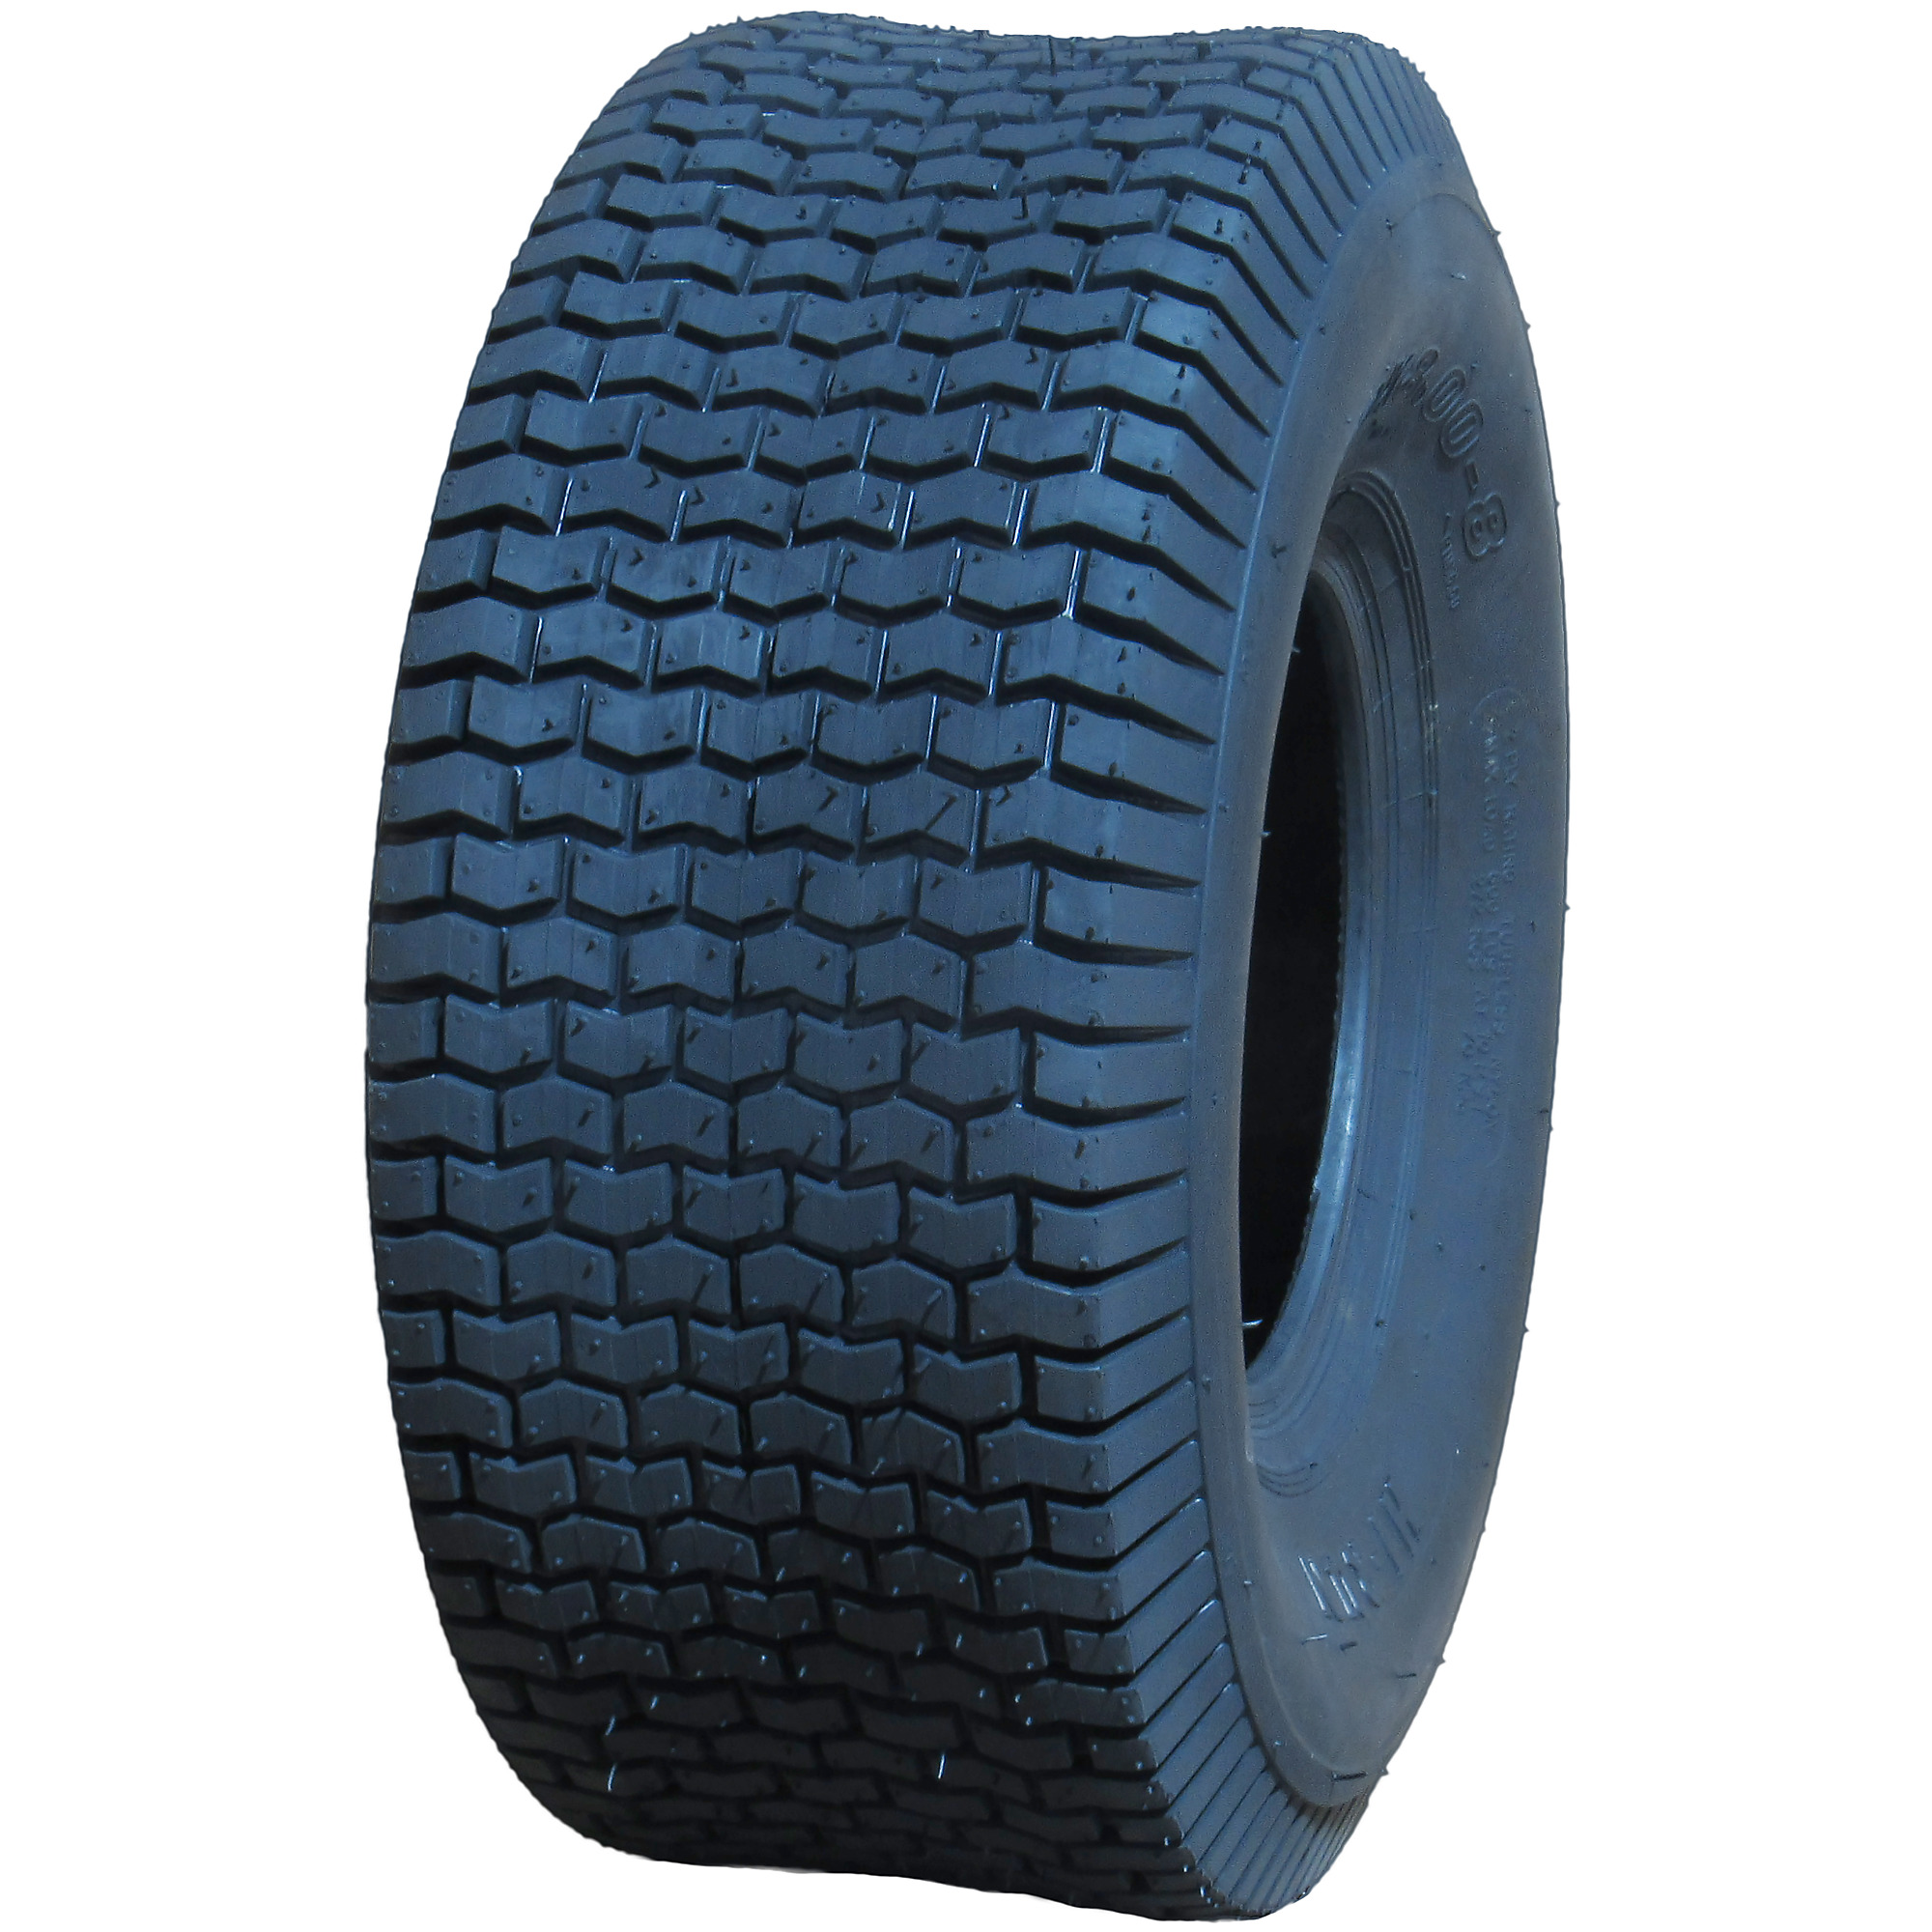 HI-RUN, Lawn Garden Tire, SU12 Turf II, Tire Size 20X8.00-8 Load Range Rating A, Model WD1035